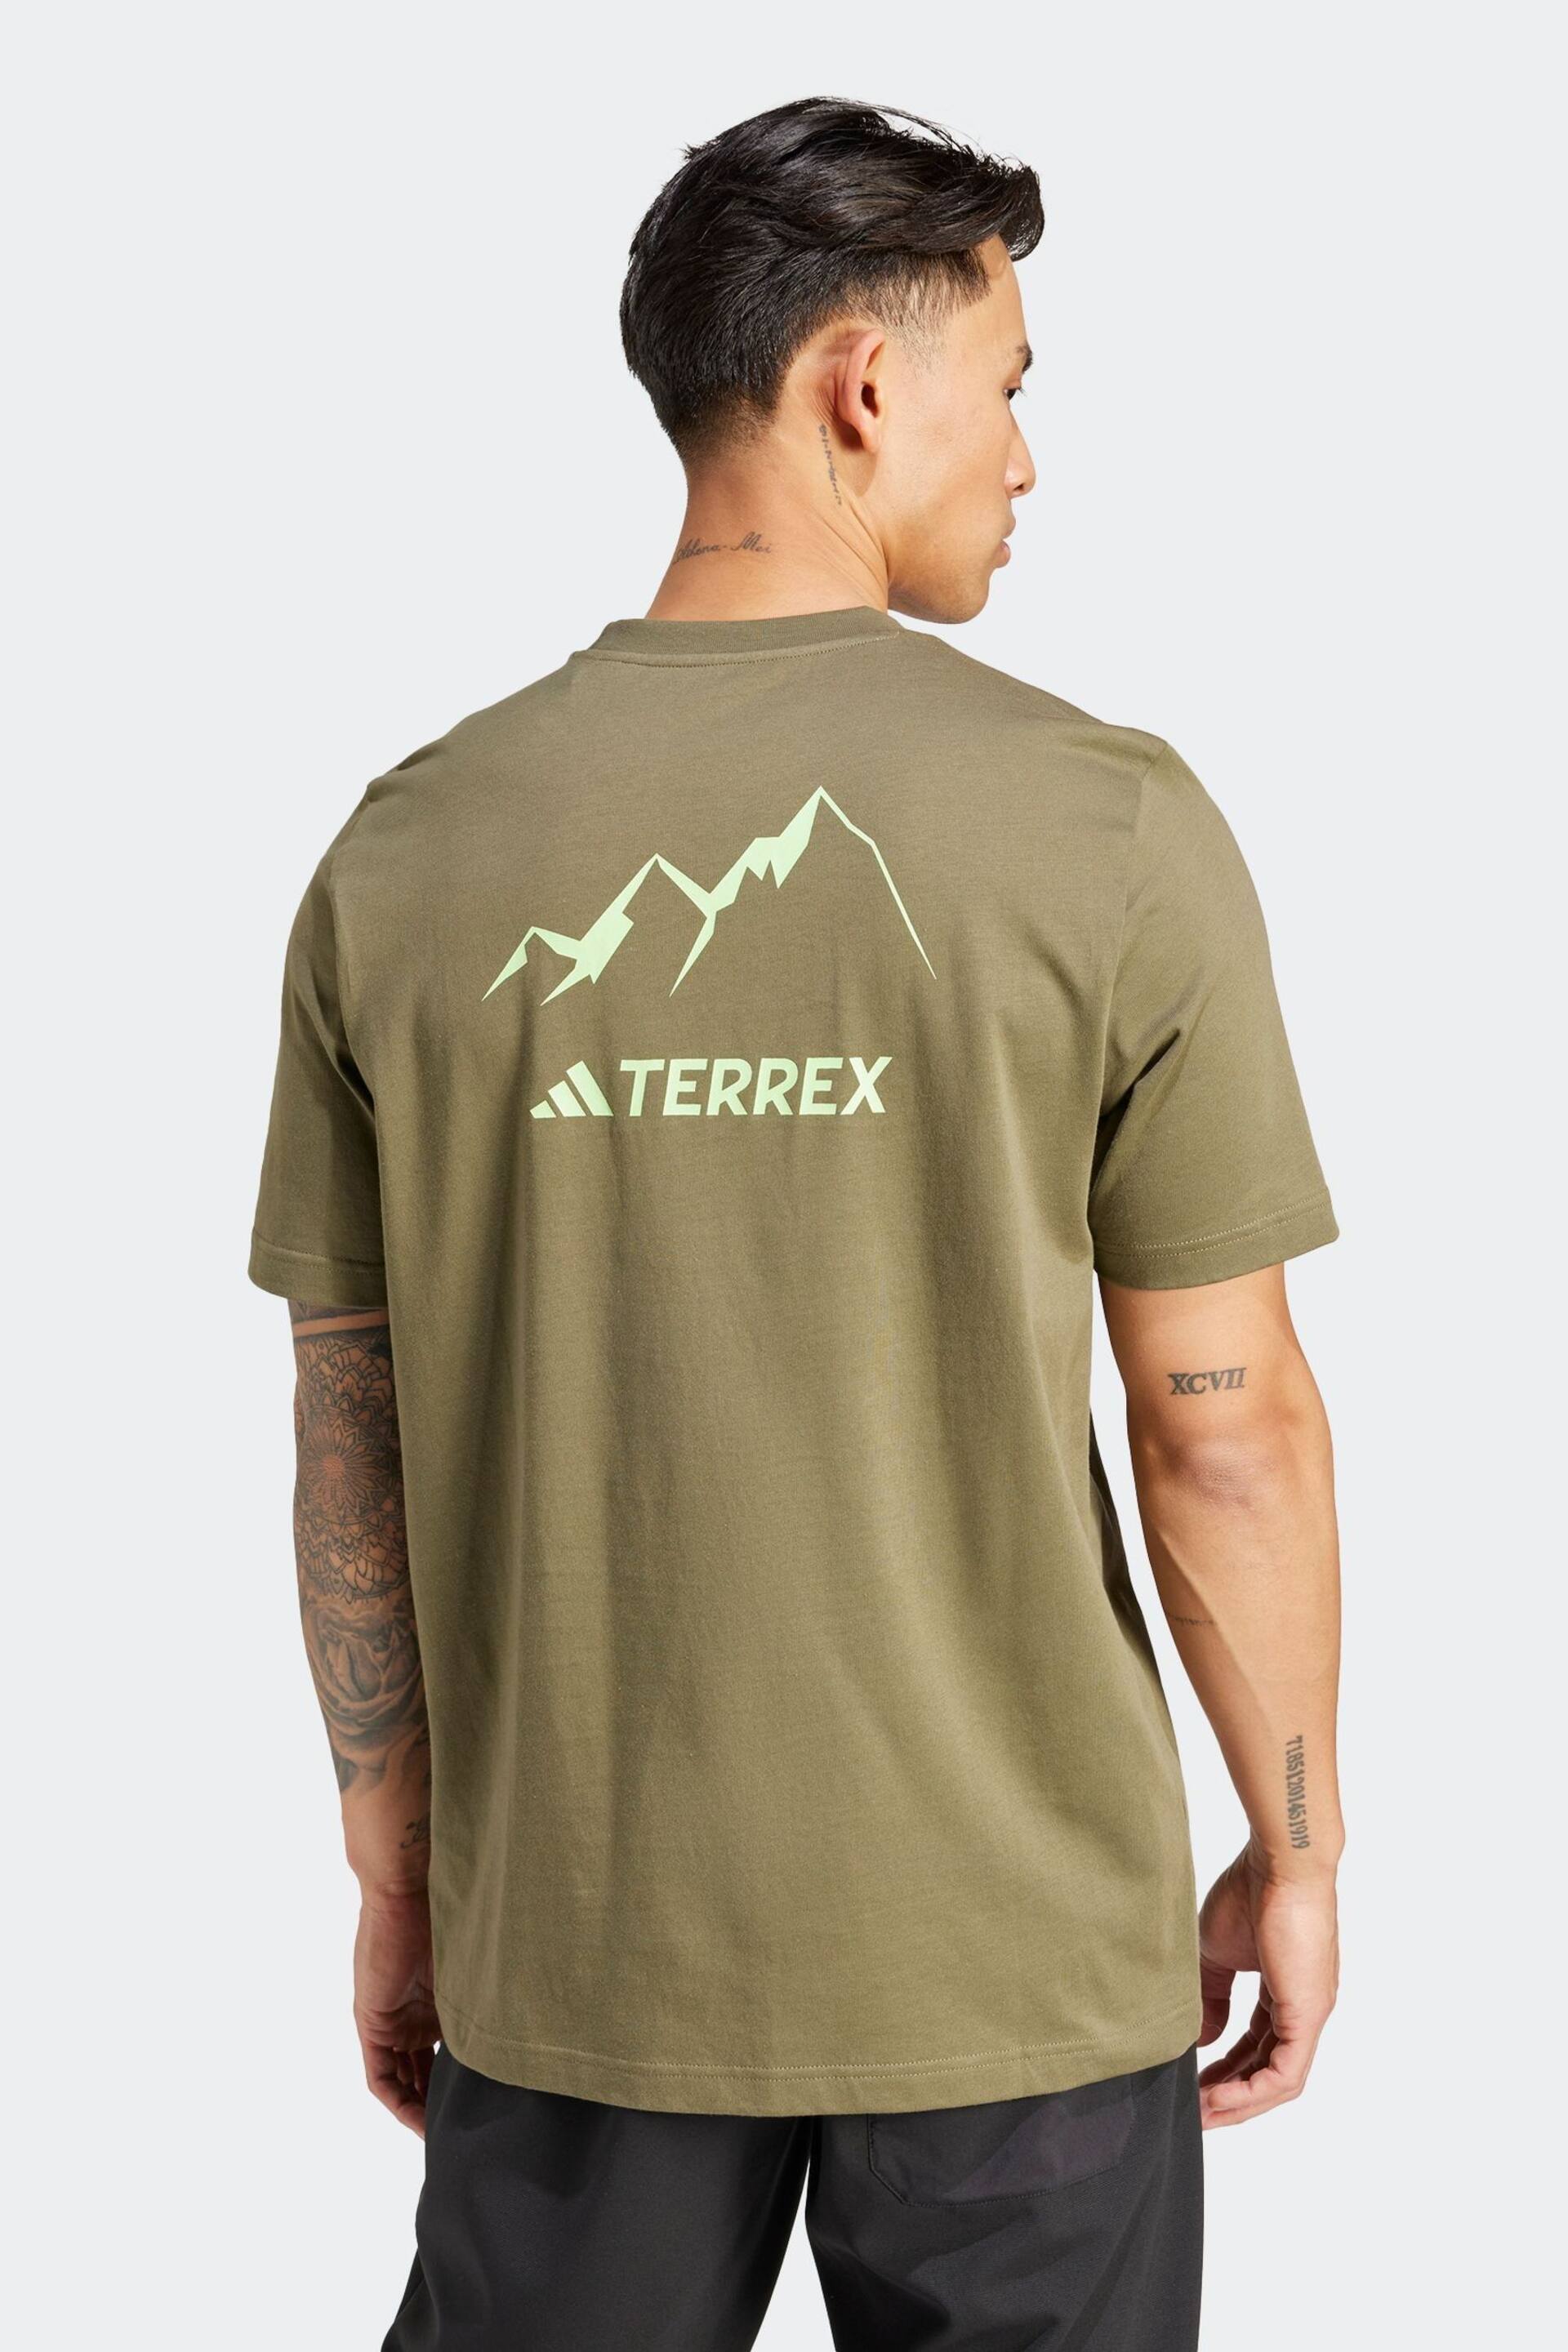 adidas Terrex Khaki Green Graphic T-Shirt - Image 3 of 7